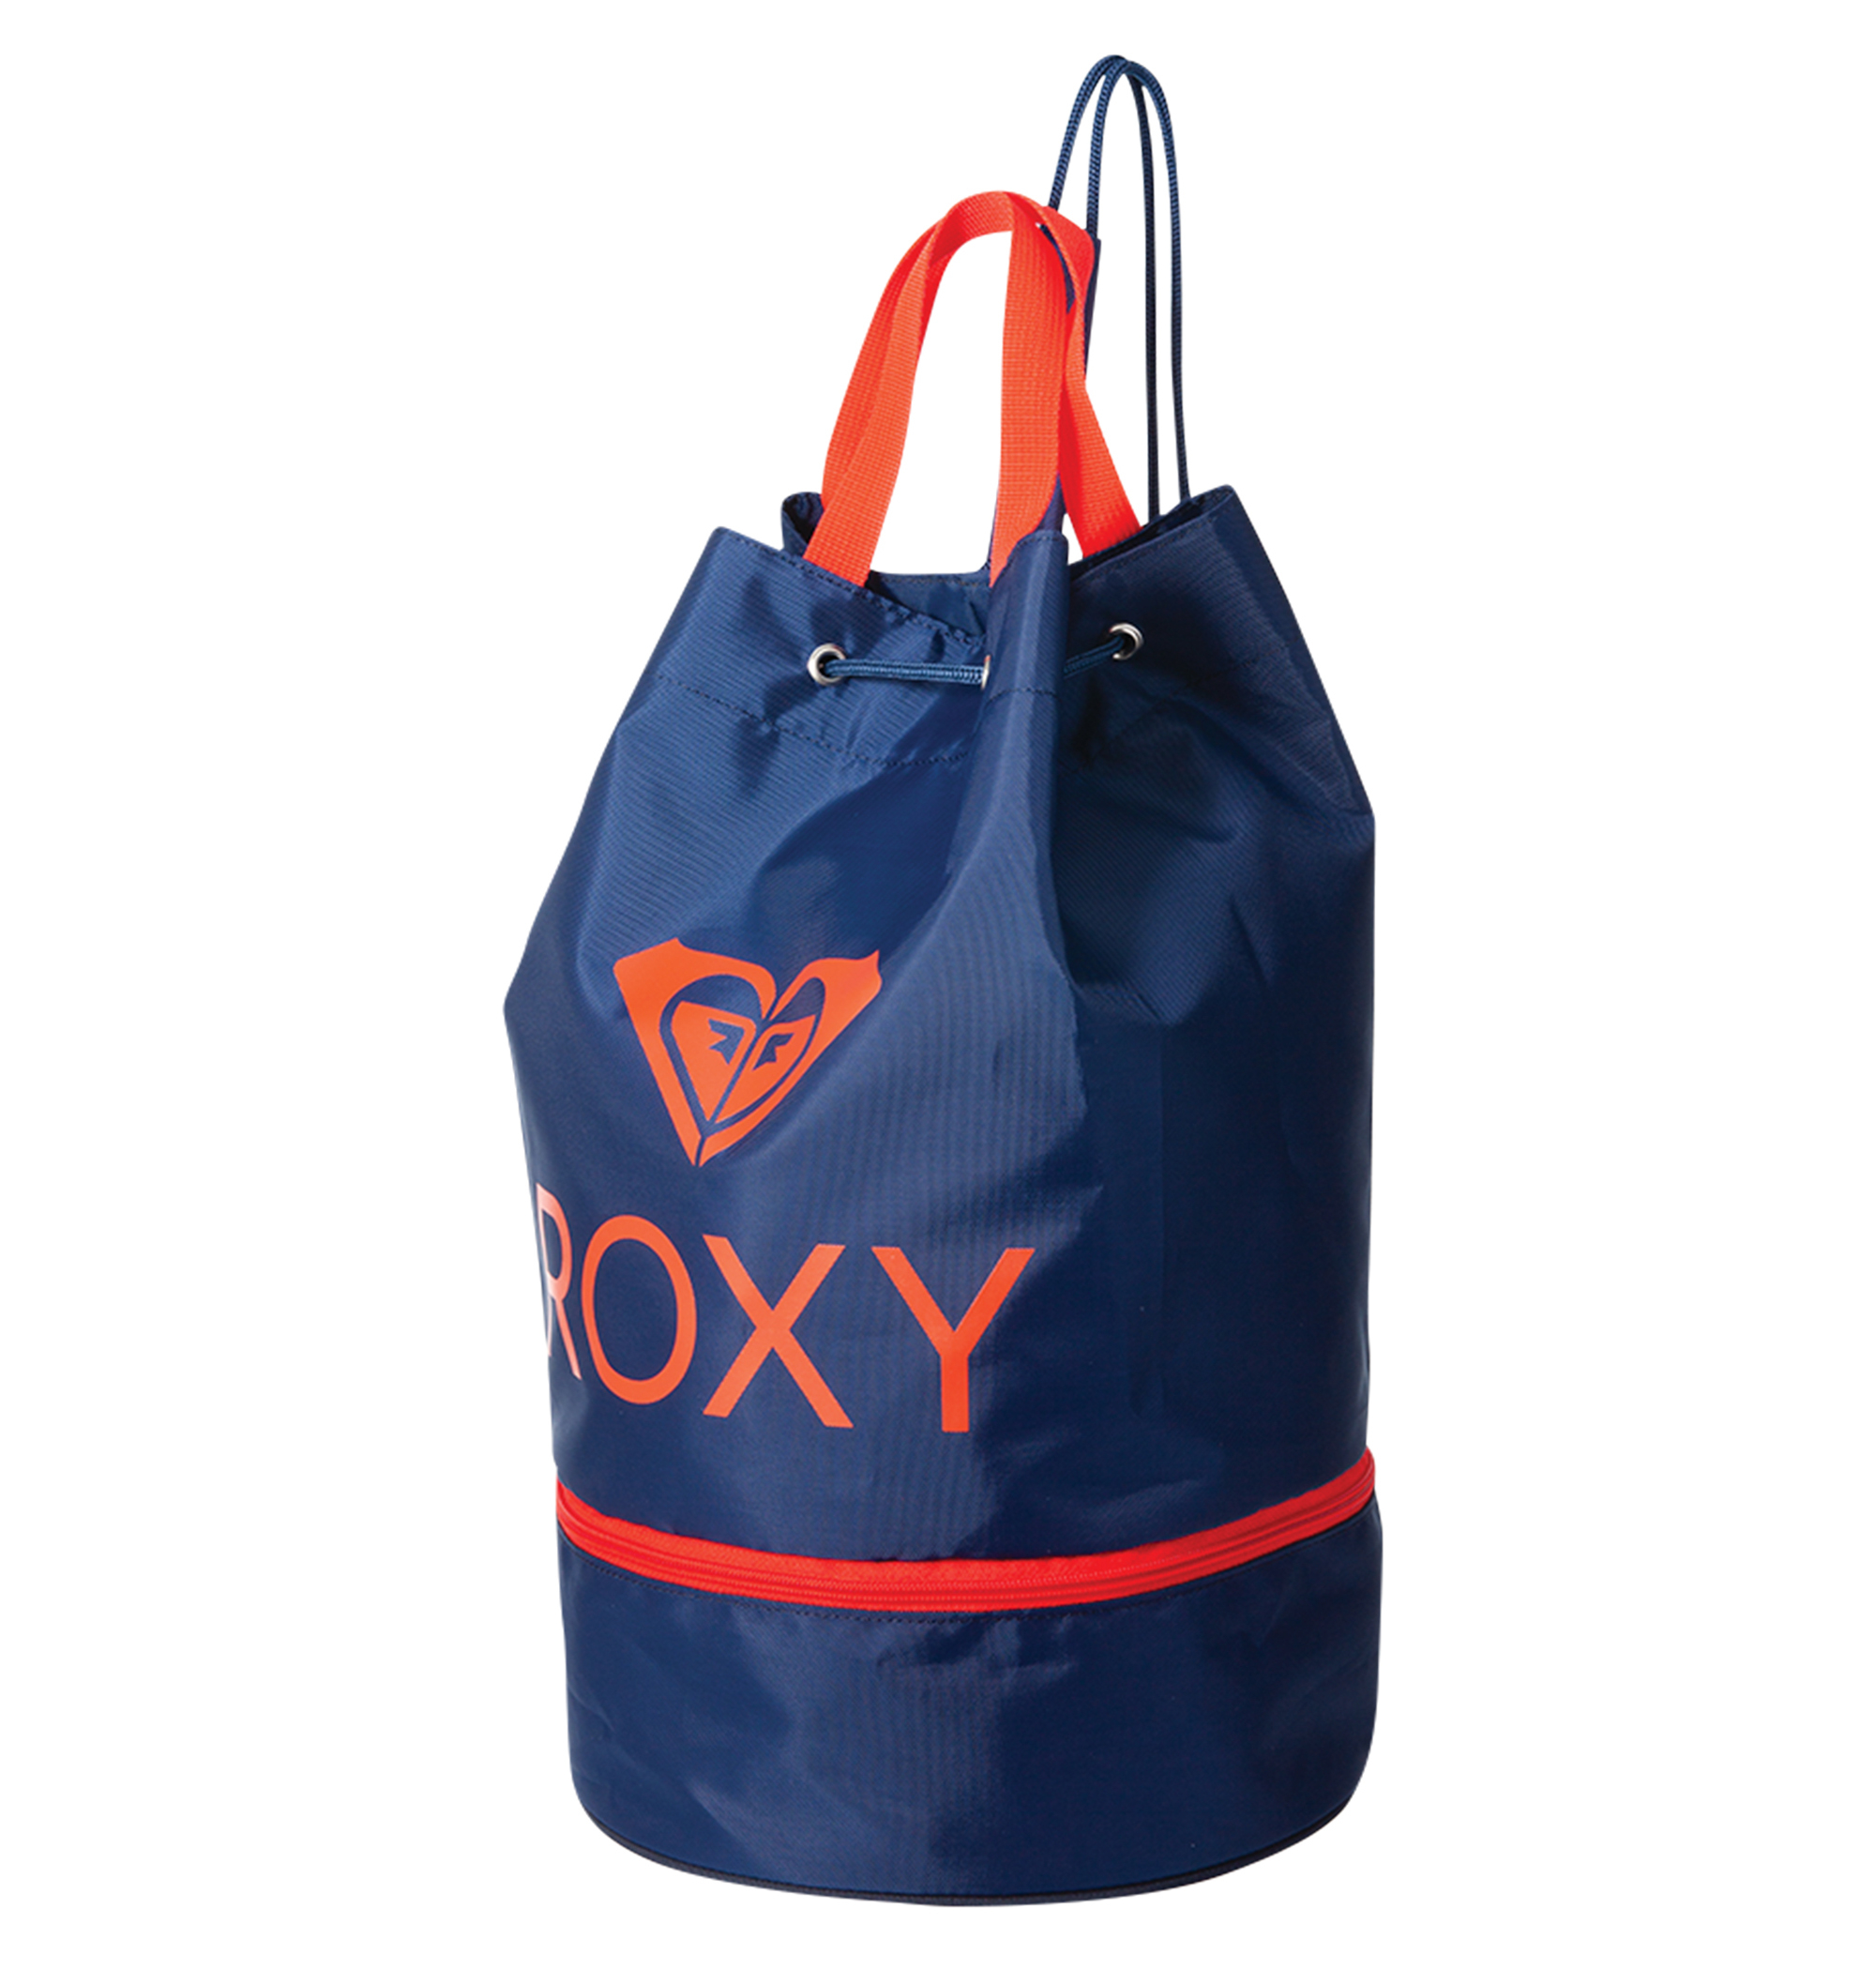 30%OFF！＜Roxy＞JUMP IN2 ハンドバッグとしても肩掛けとしての使用も両方できる便利なバッグ